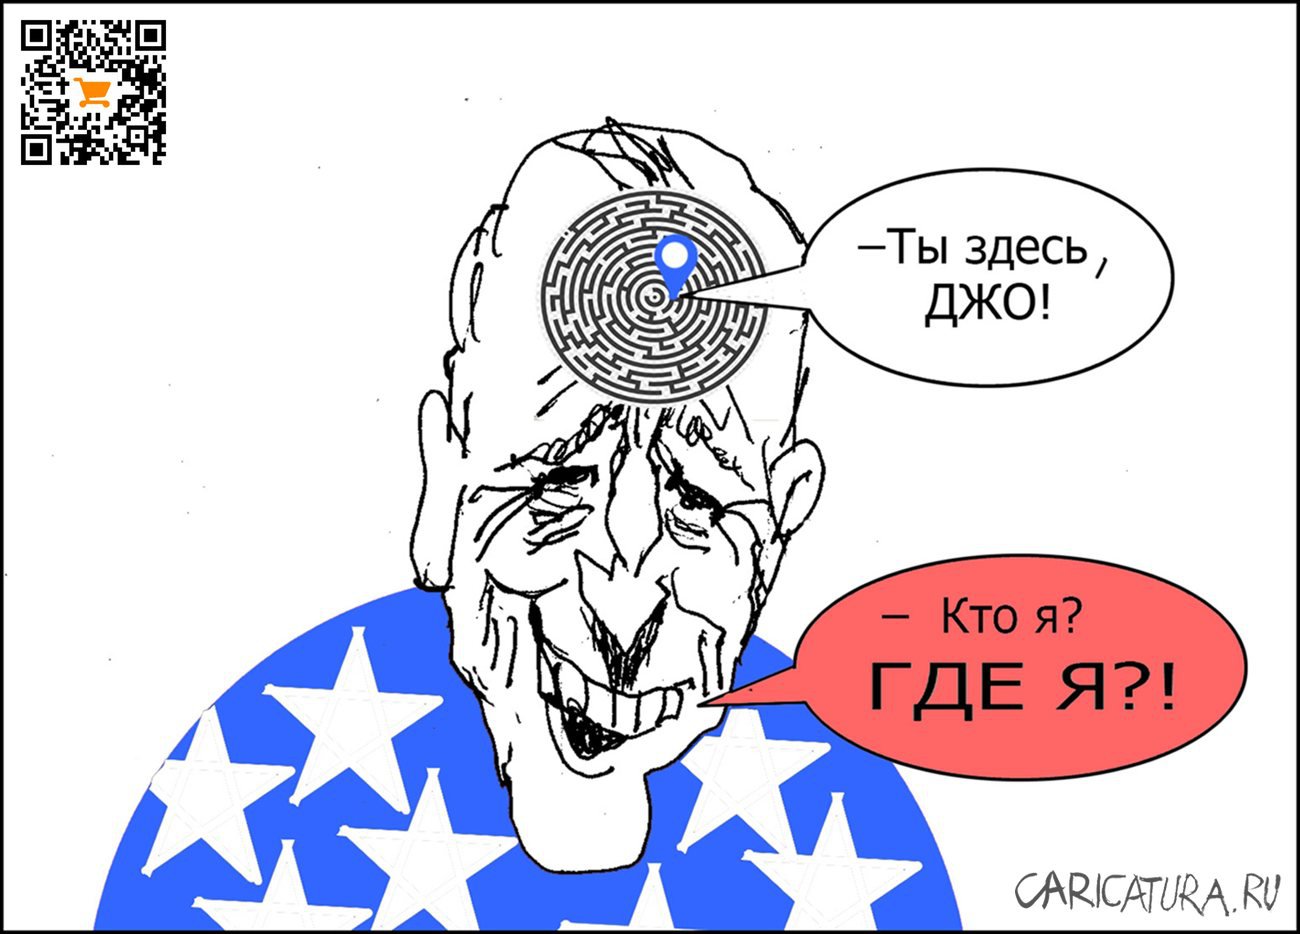 Карикатура "Синяя метка", Александр Уваров